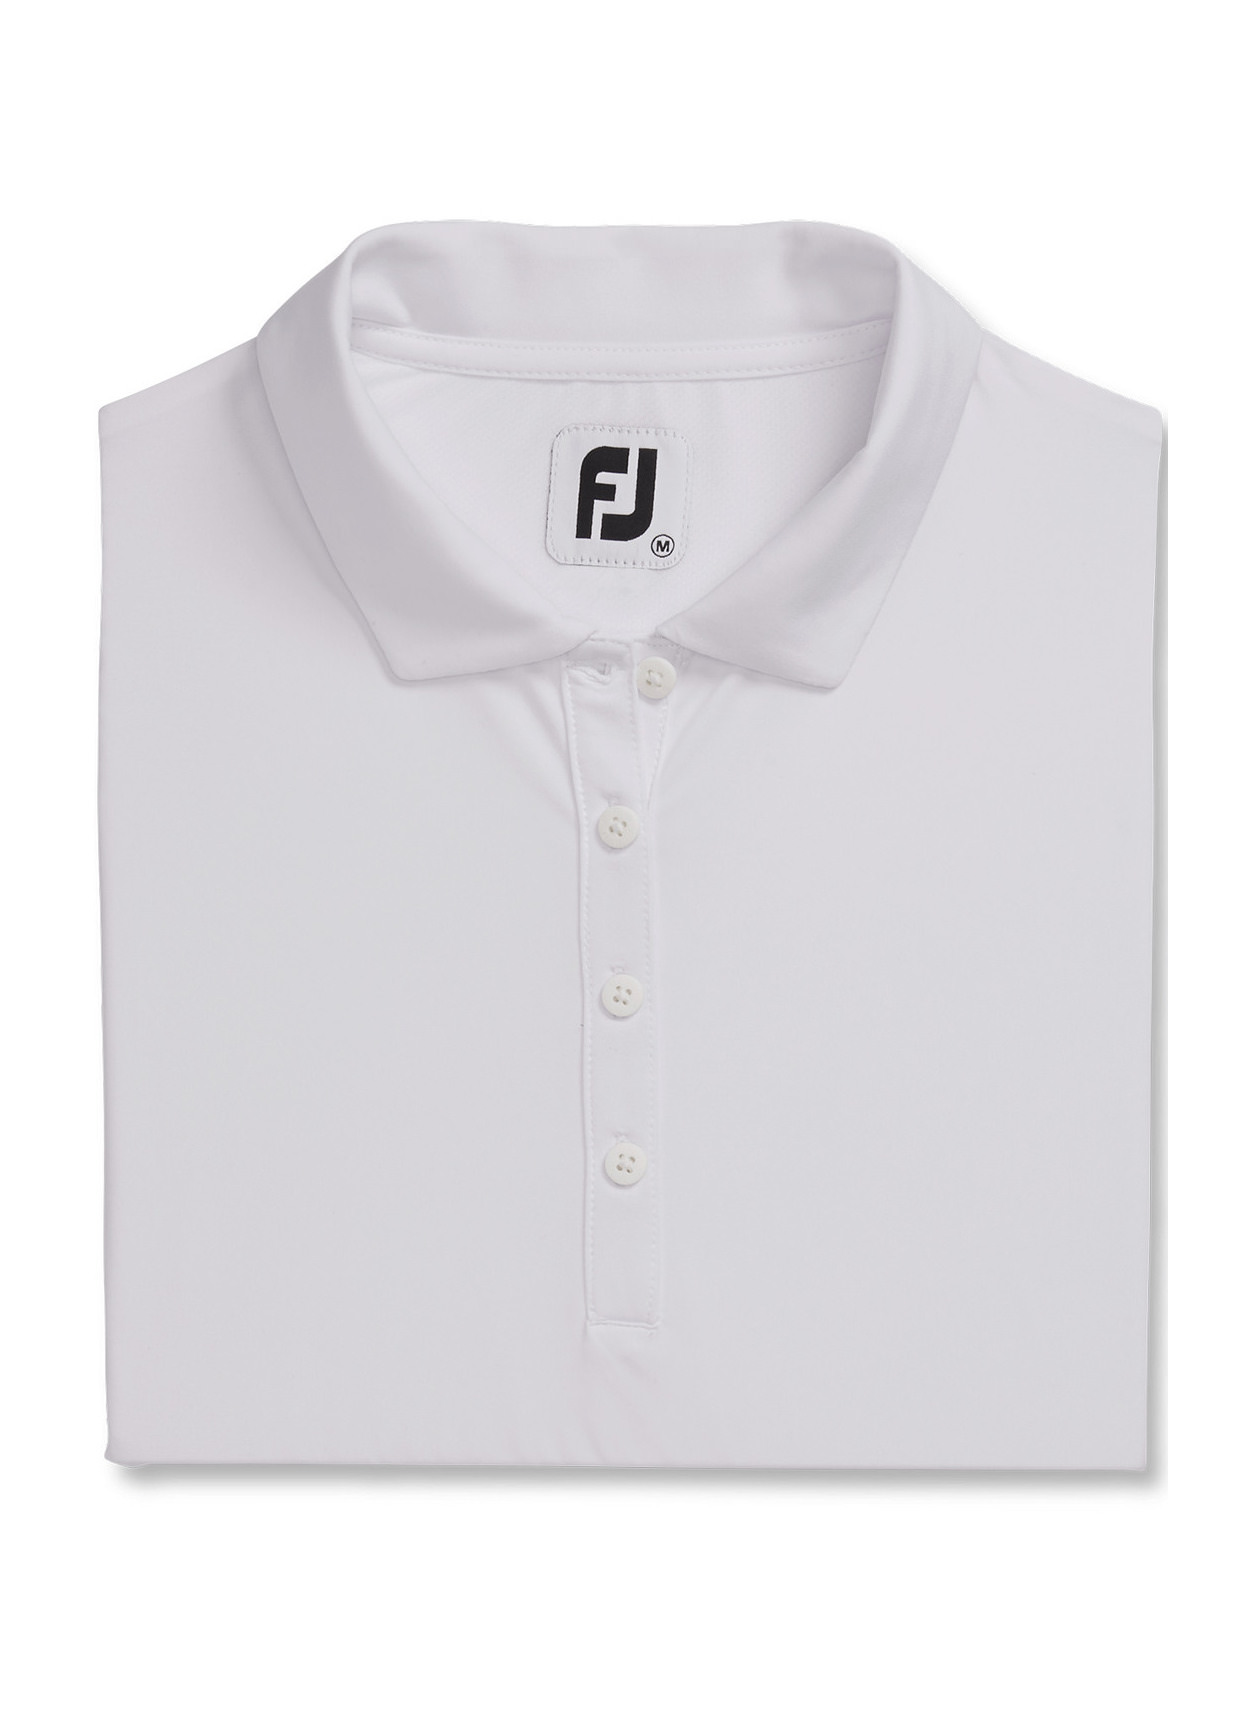 FootJoy Women's White Sun Protection Long-Sleeve Shirt